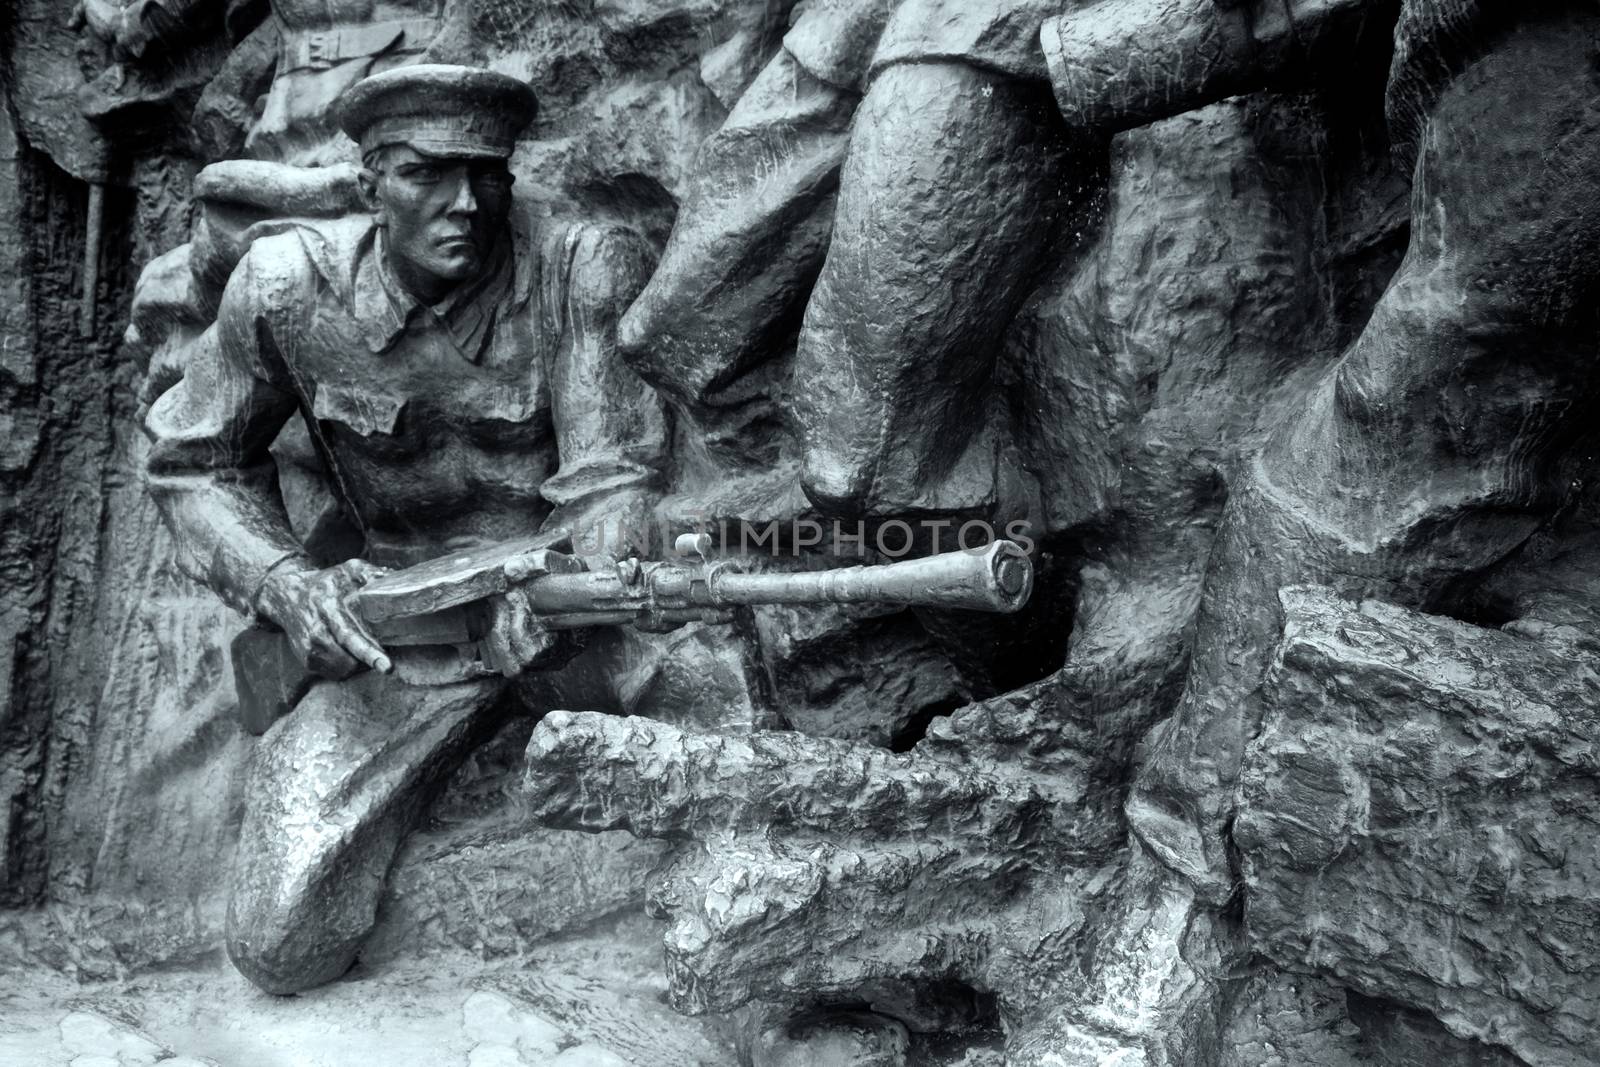 Stone soldier, Great Patriotic War by vitaliygrebenuk@gmail.com